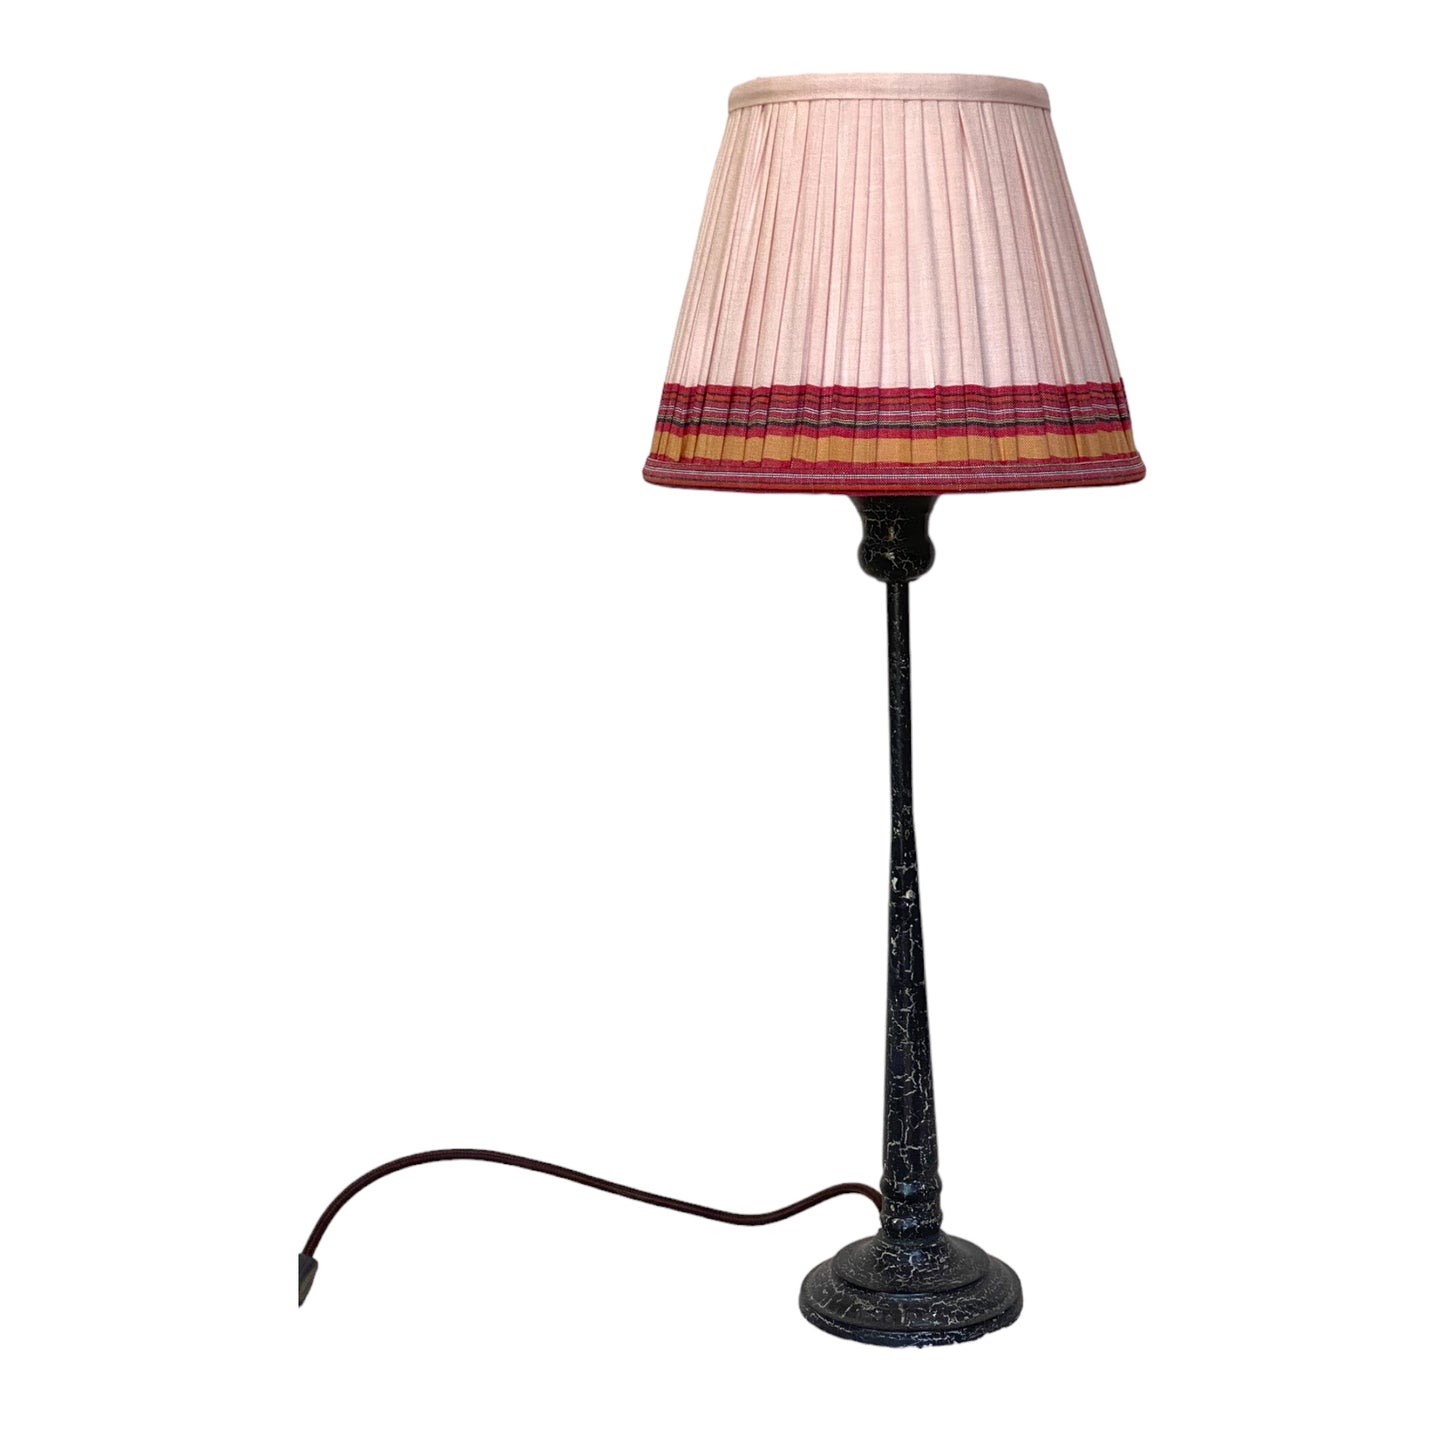 Izmir cotton lampshade on Patala lamp